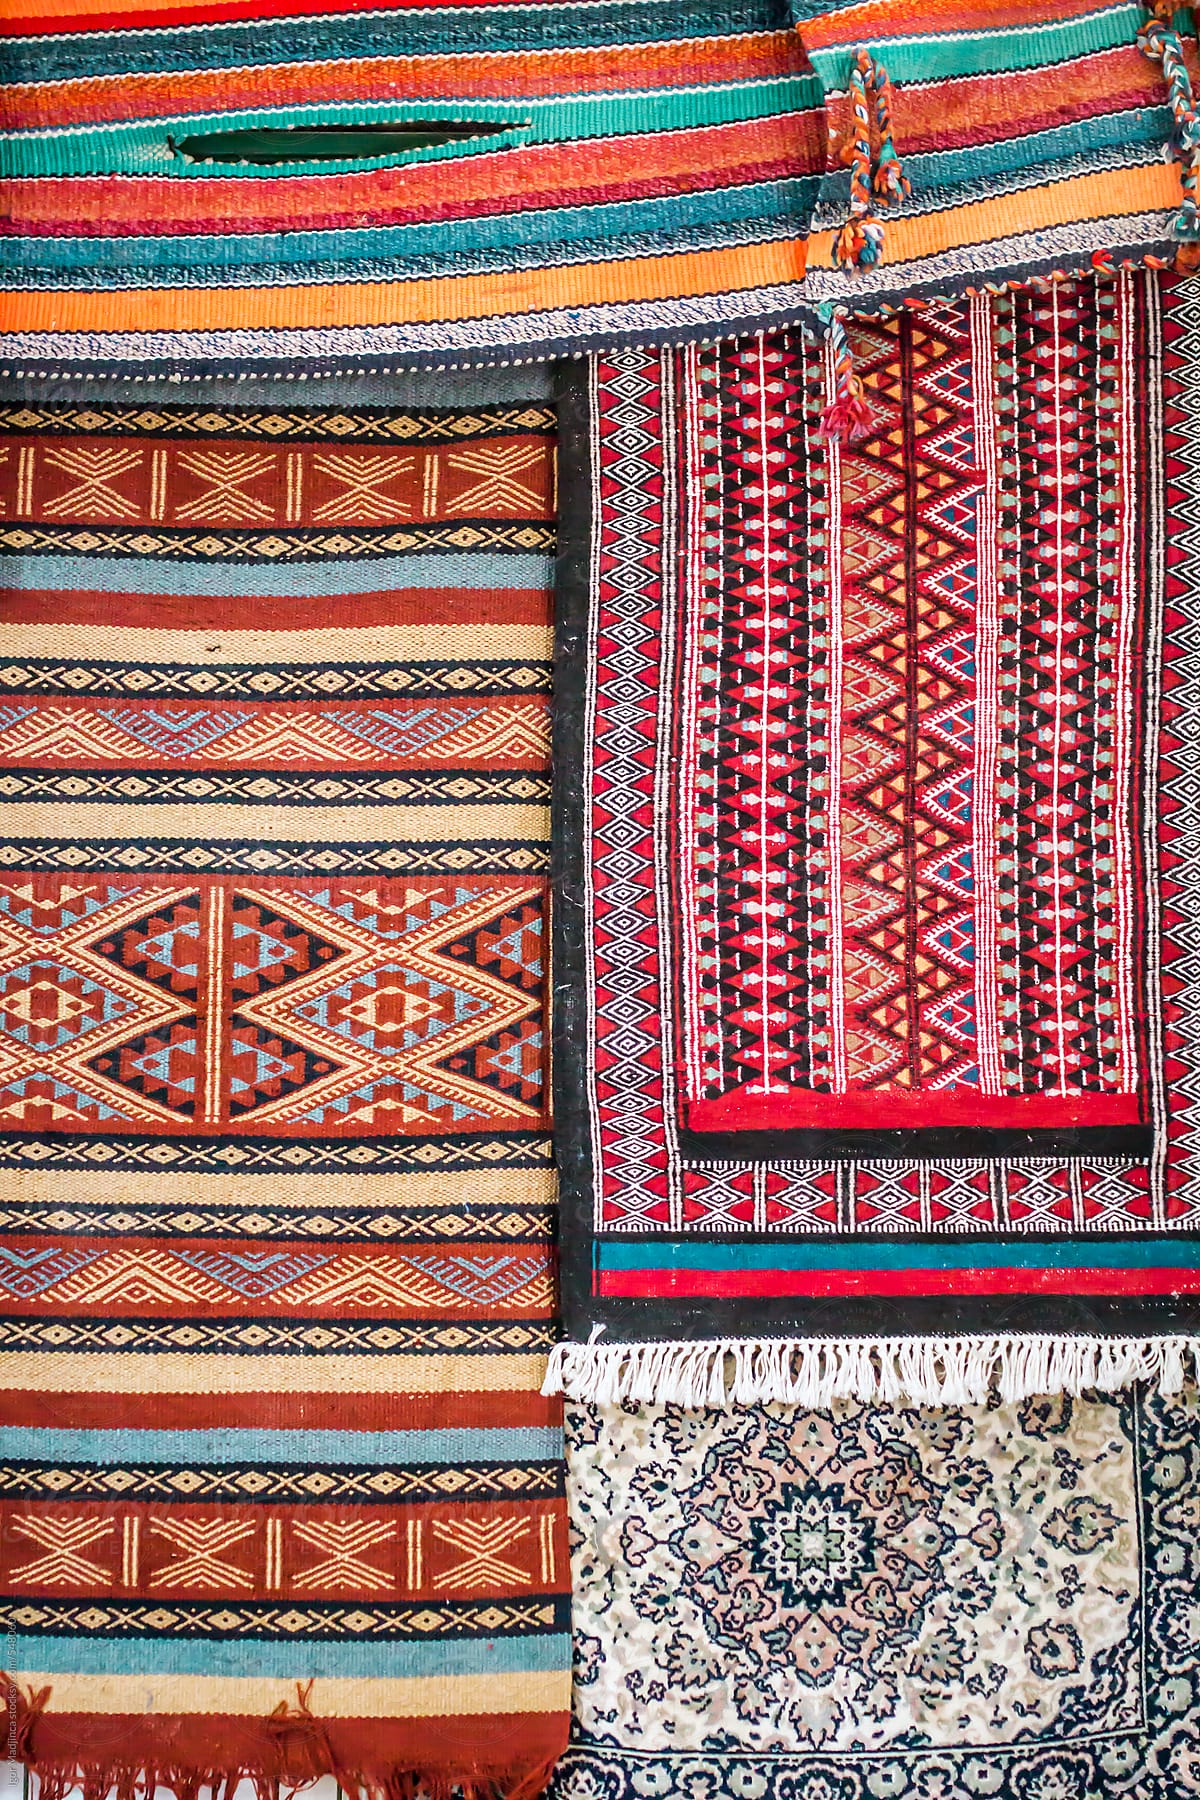 handwoven traditional Muslim colorful prayer rug